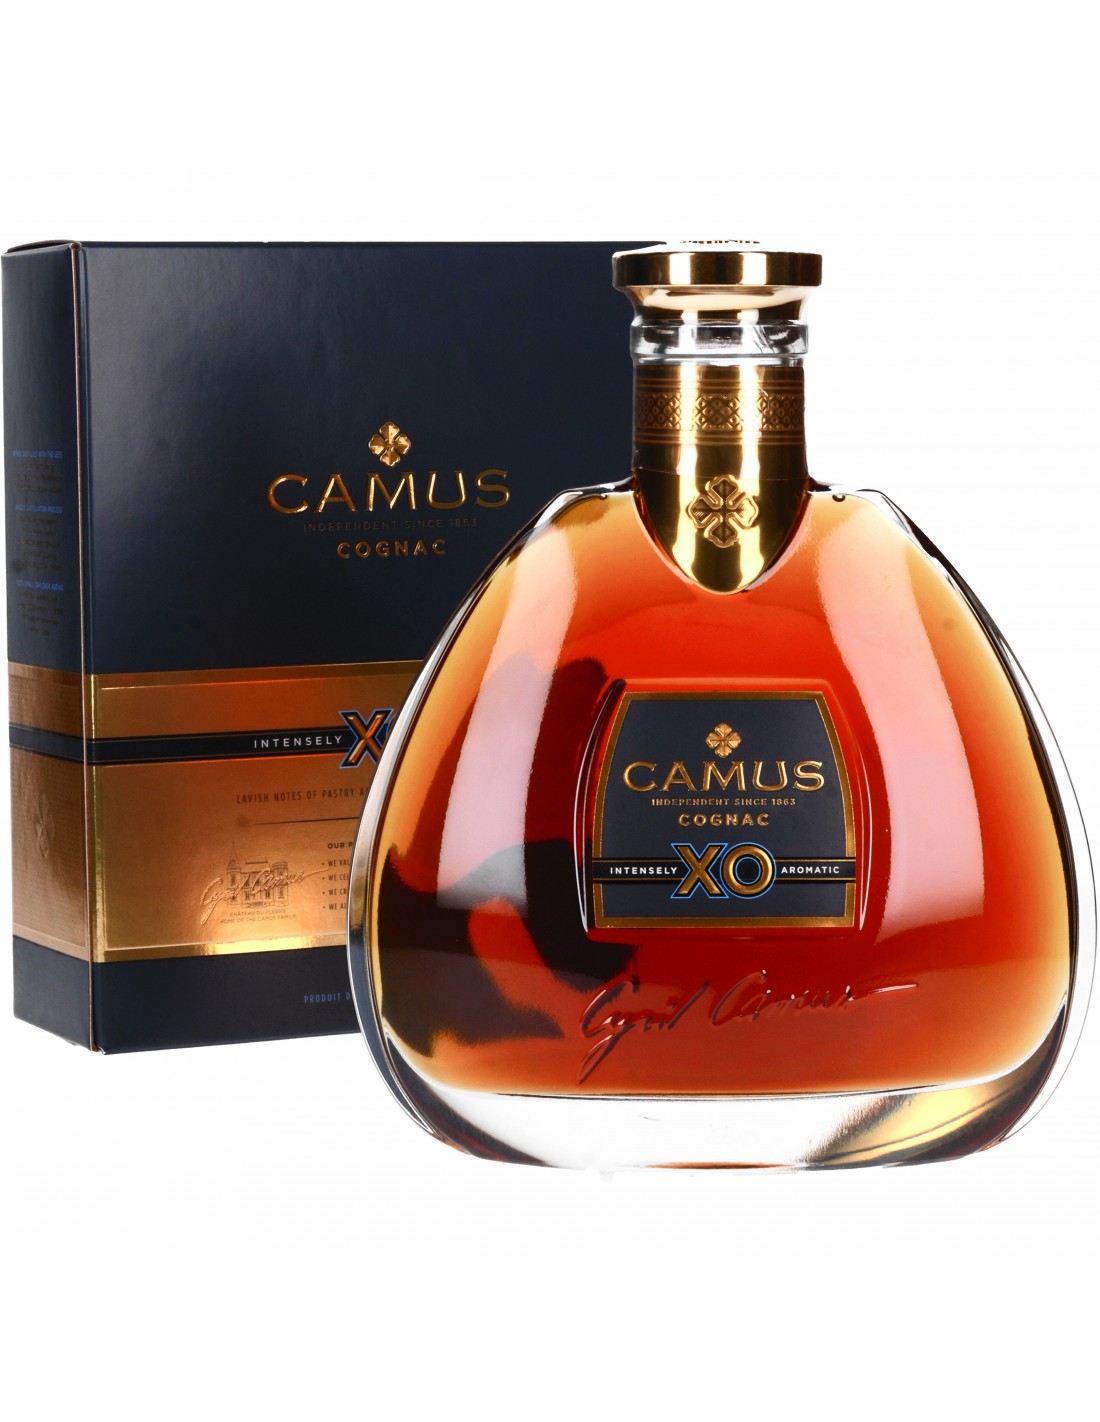 Camus Cognac Xo Intensely 40° Etui - Camus - Cognac Digestifs